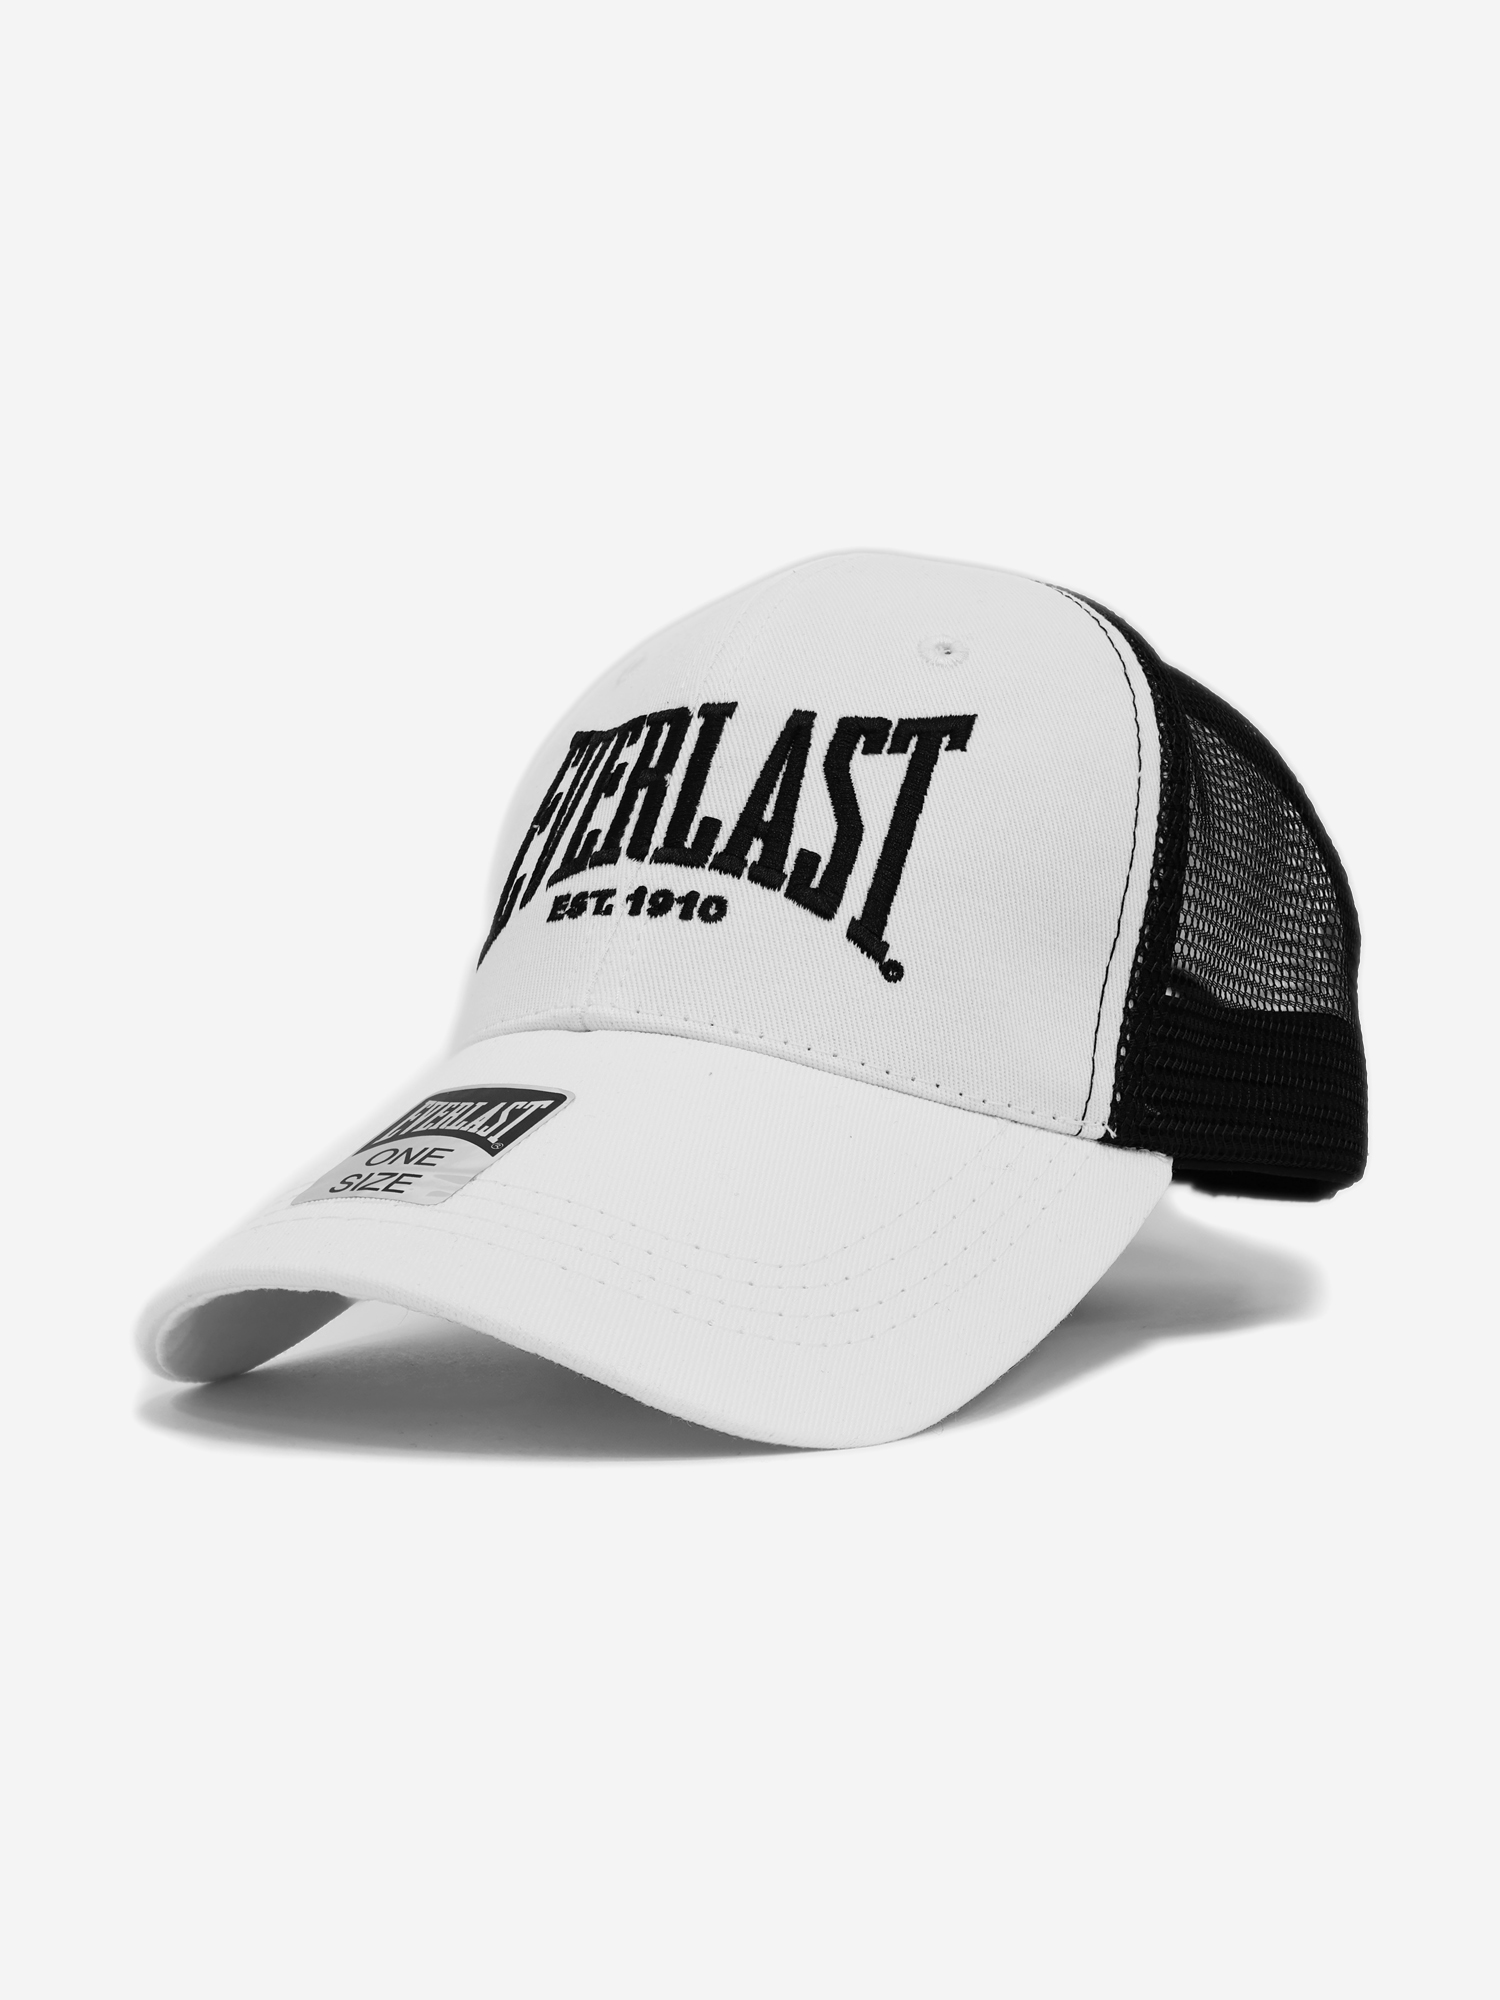 Бейсболка Everlast Classic 1910 Mesh, Белый бейсболка everlast classic 1910 mesh серый